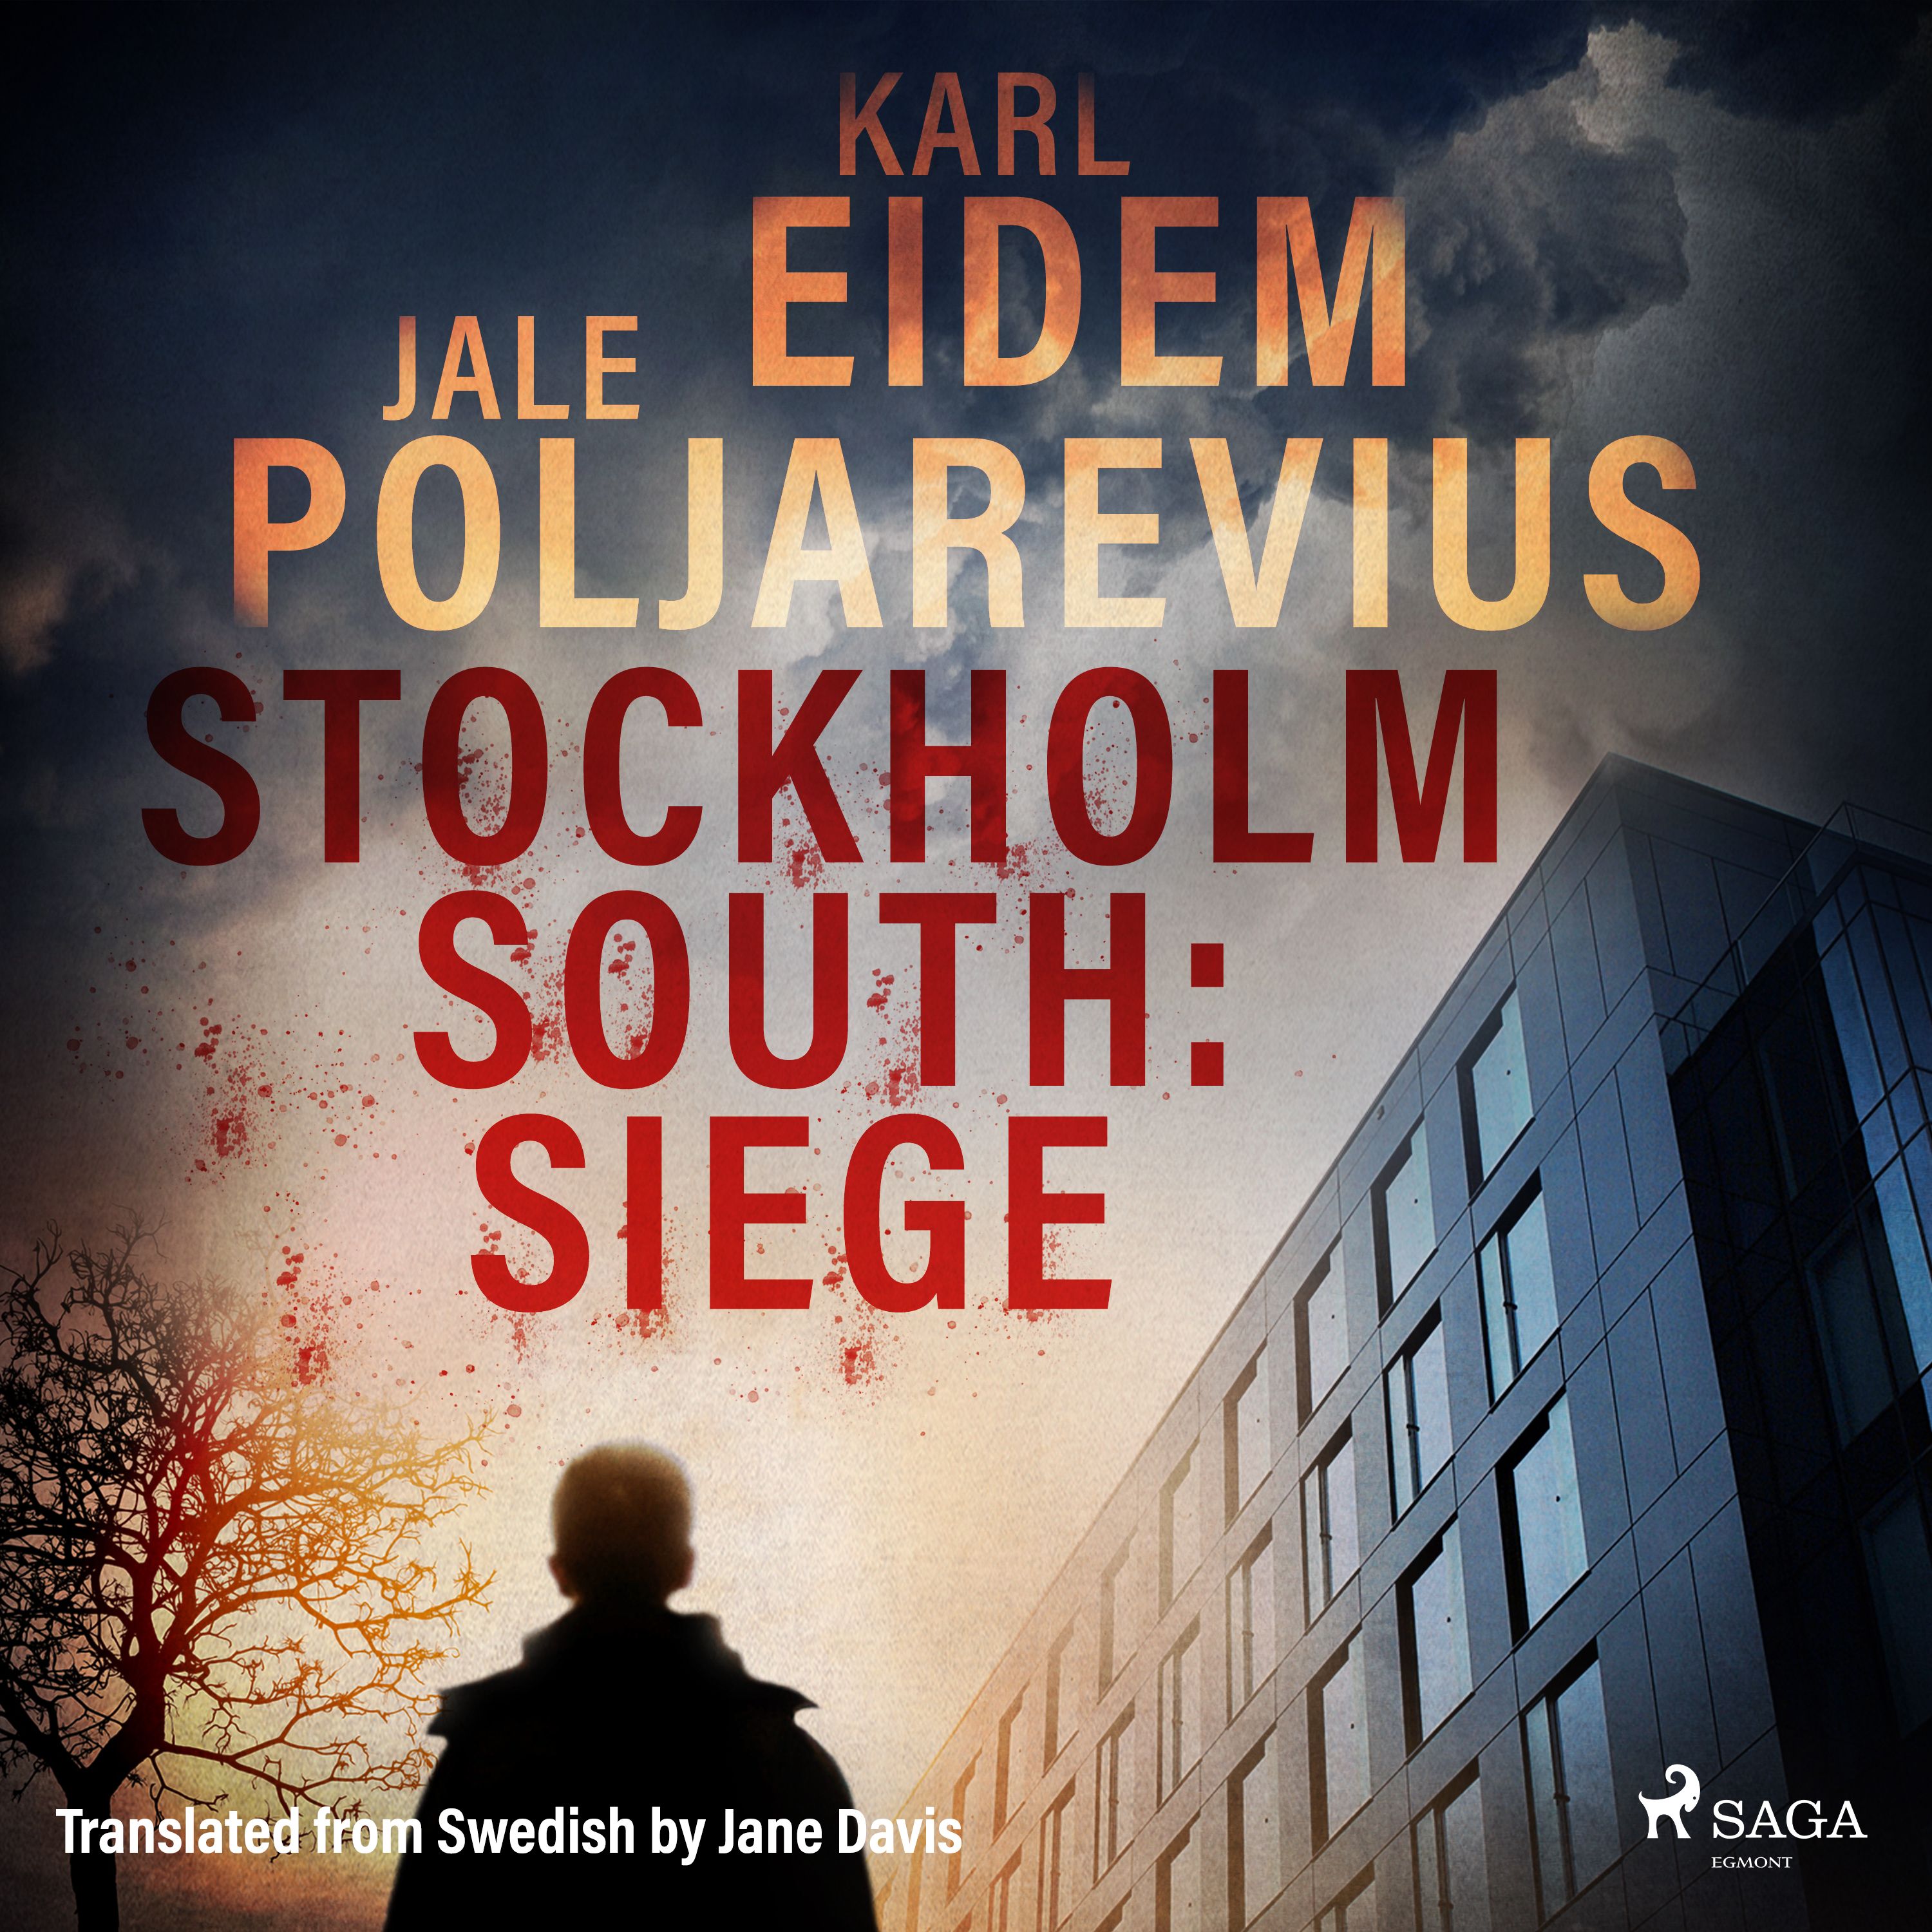 Stockholm South: Siege, ljudbok av Karl Eidem, Jale Poljarevius